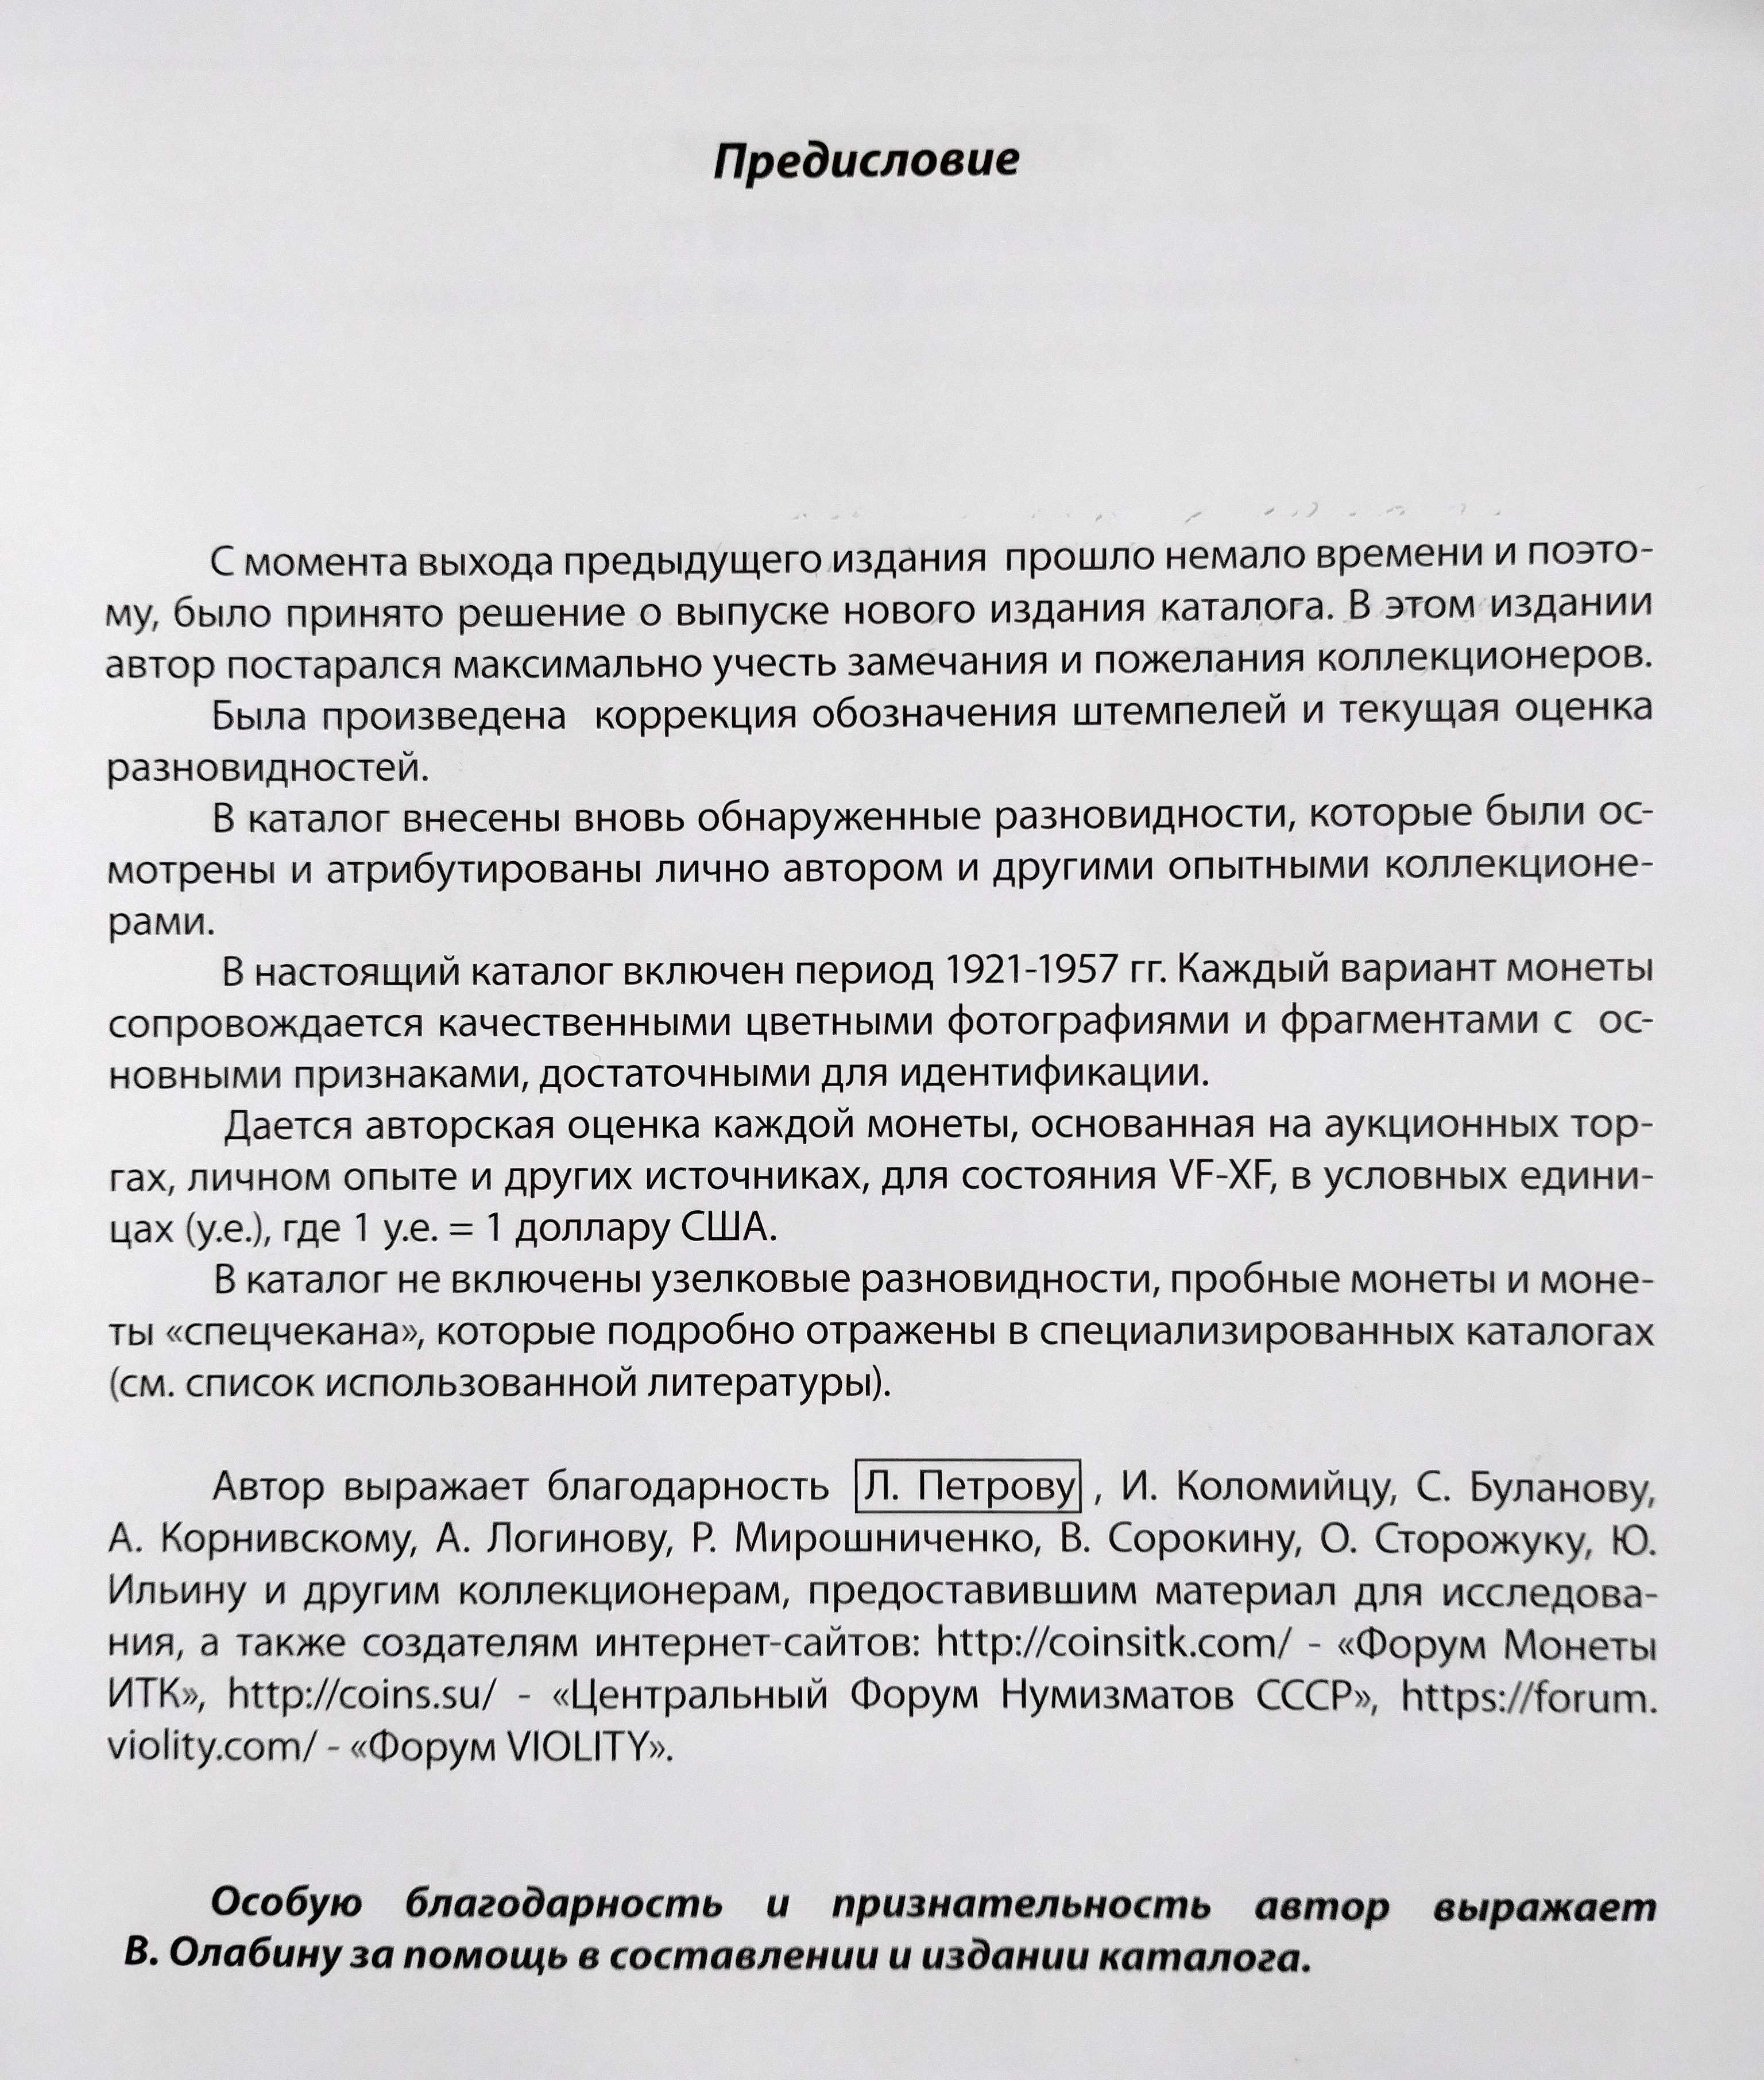 Тилижинский Каталог Монеты СССР из обращения 2-е издание 2022 г.